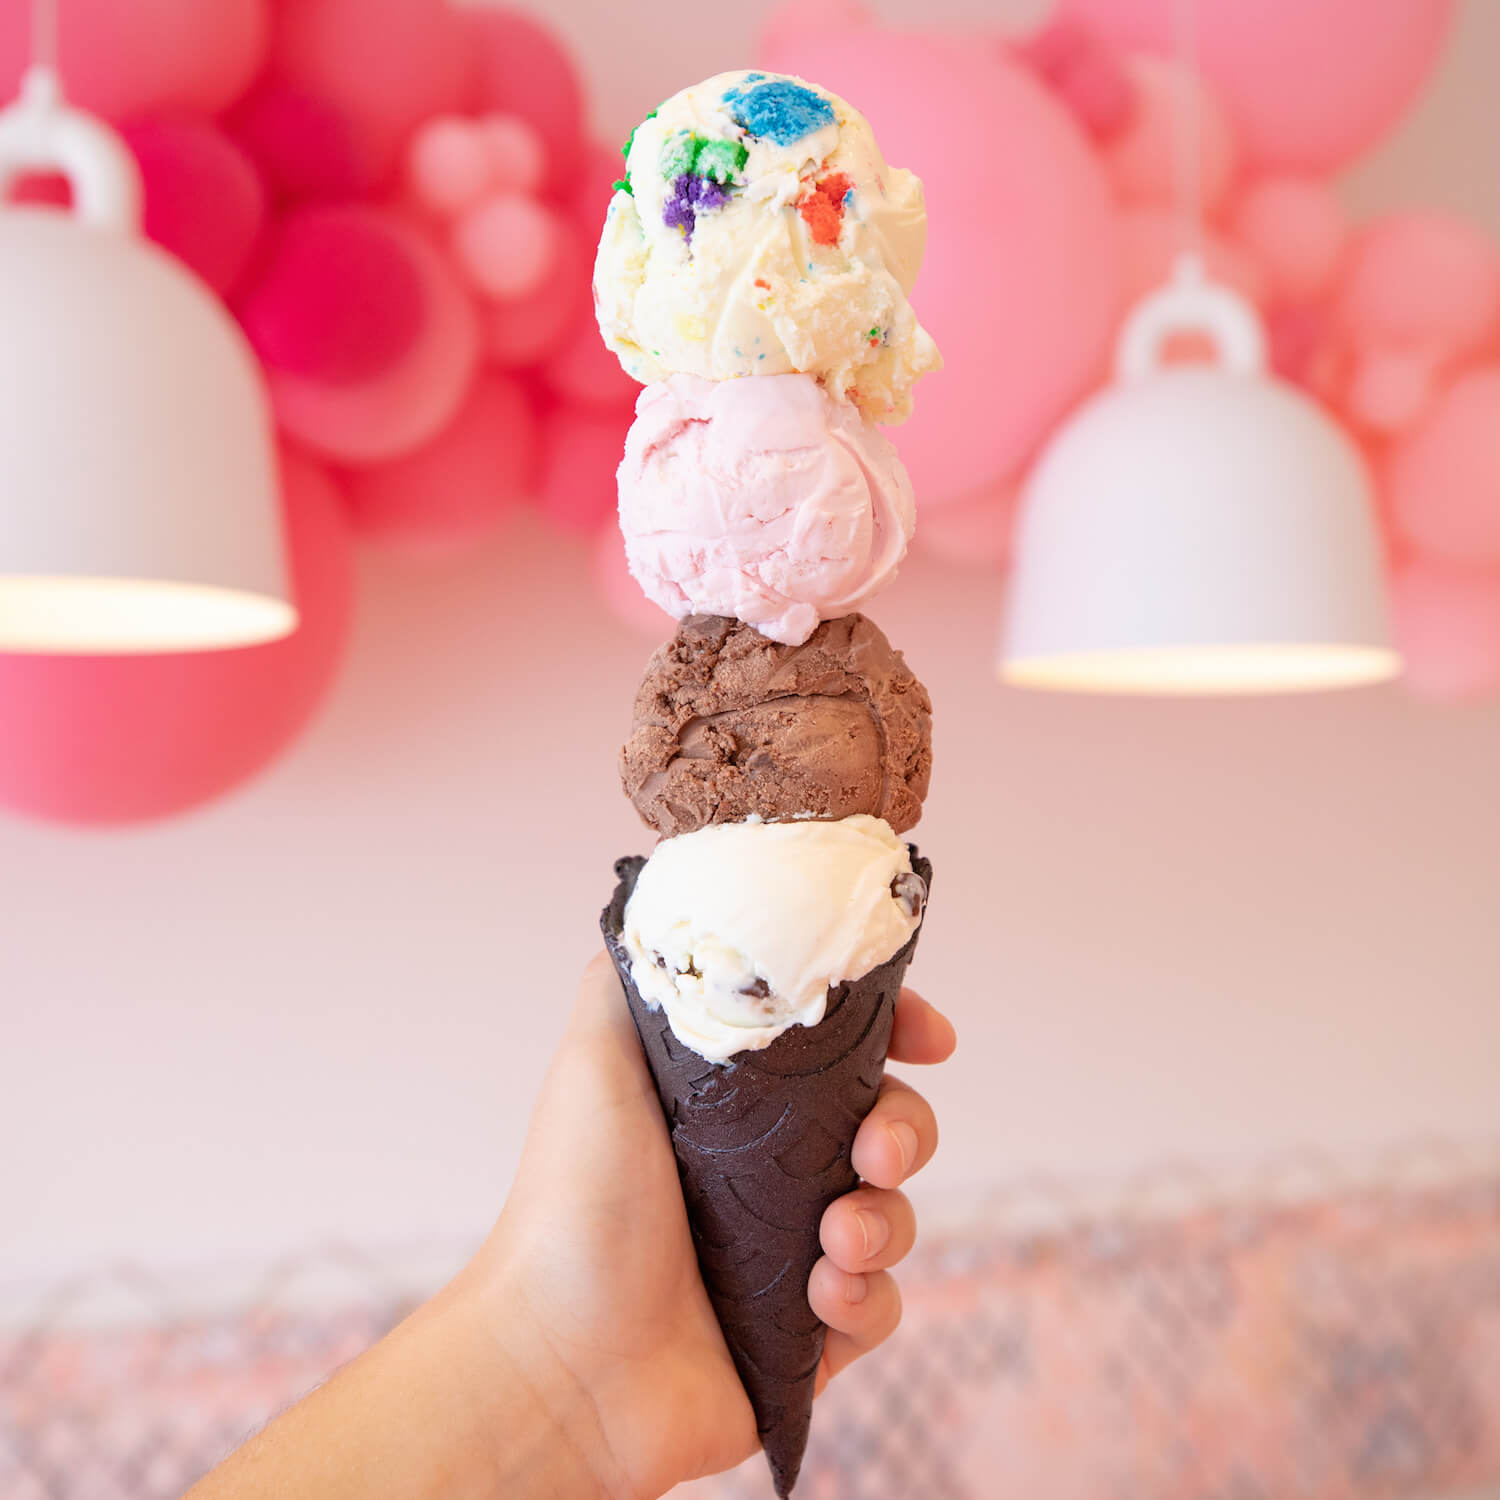 Scoops from Flower & Cream artisan ice cream shop on Holcombe Boulevard. (Courtesy photo)